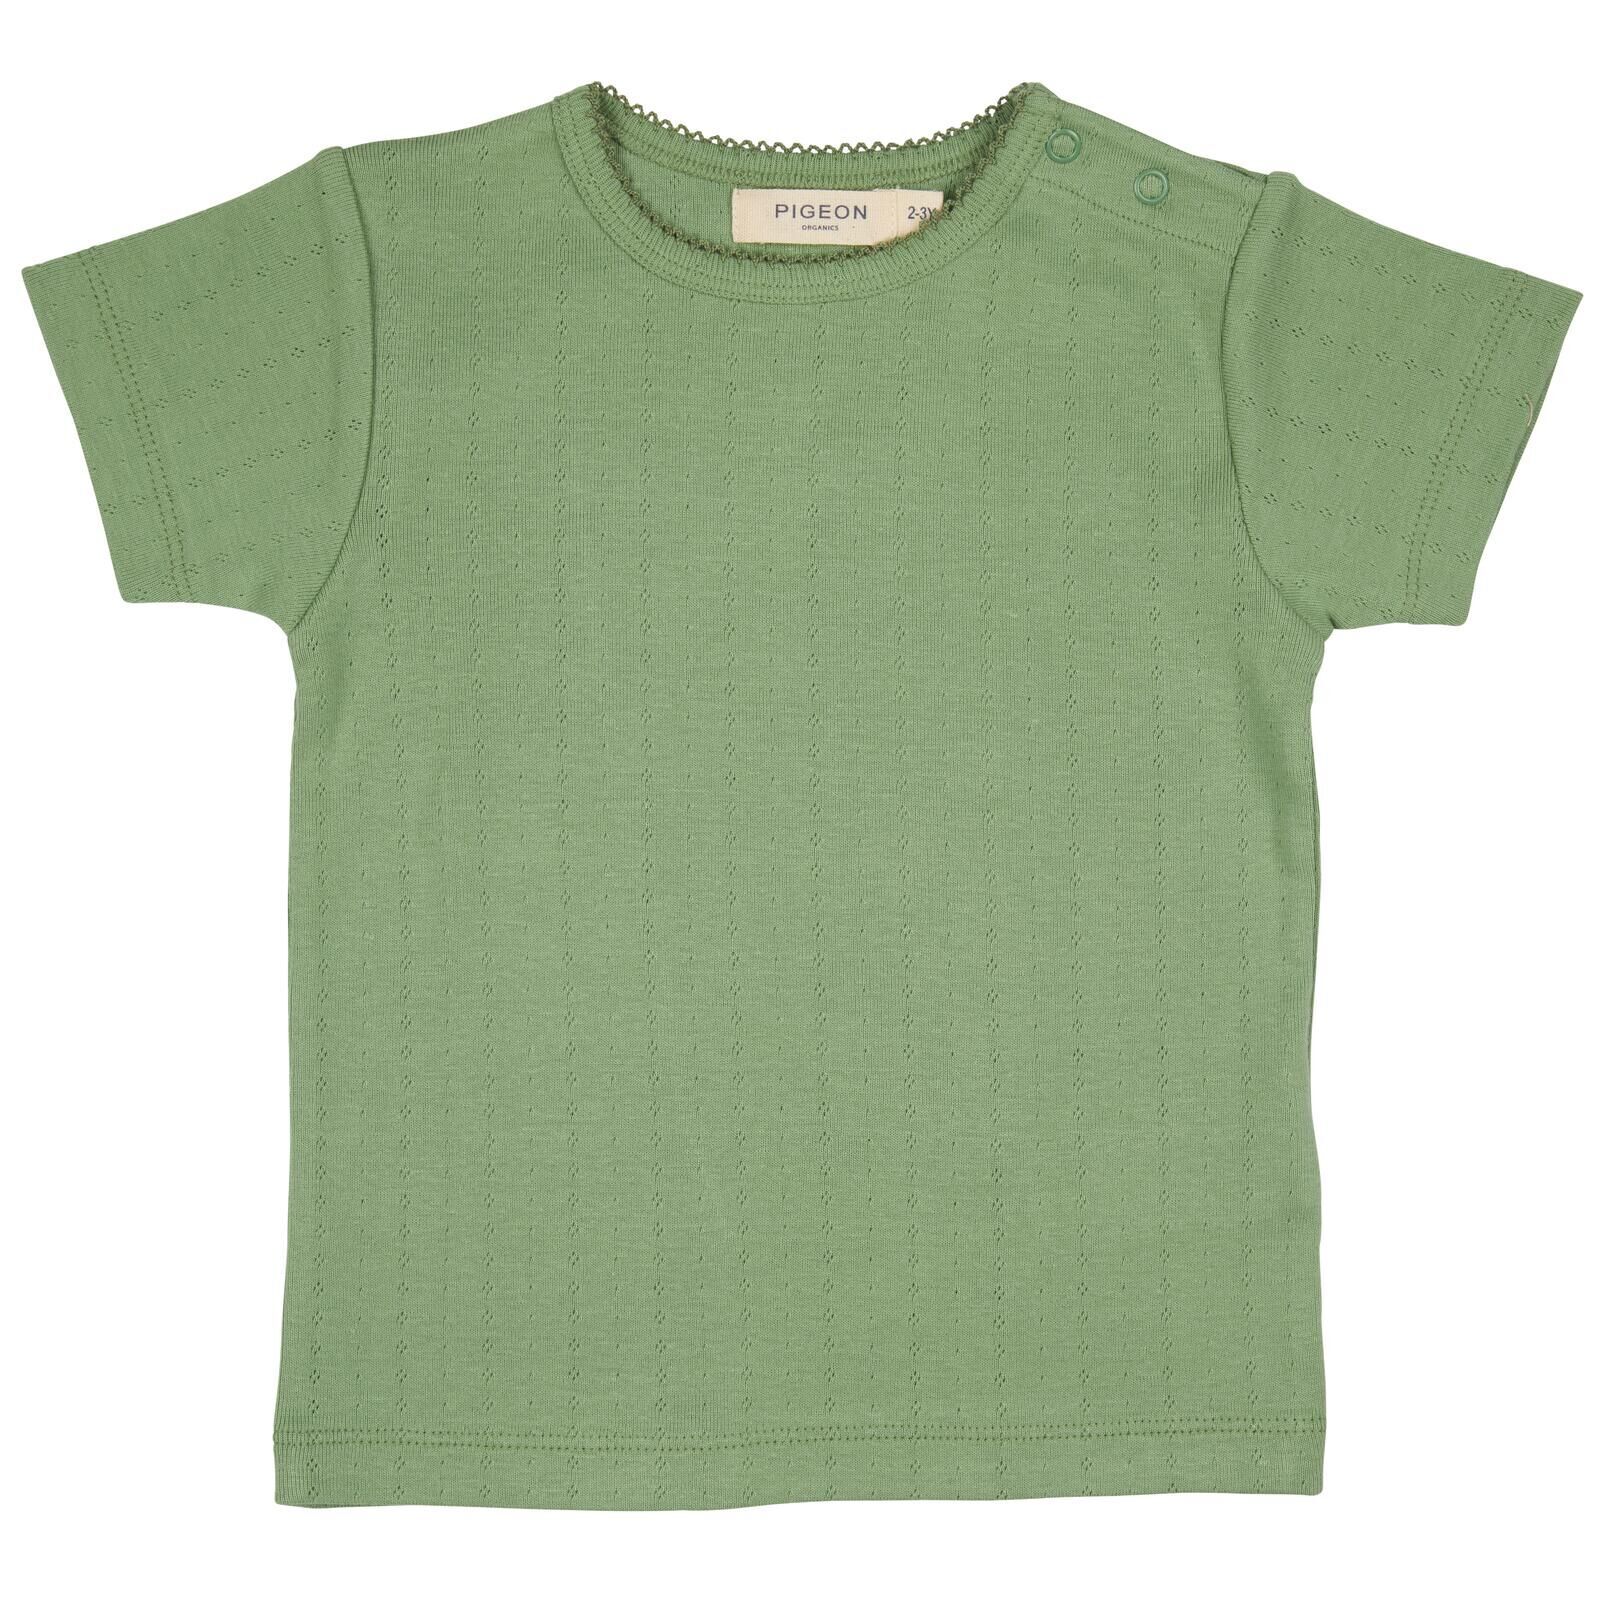 PIGEON ORGANICS Kinder T-Shirt Pointelle grn 74/80